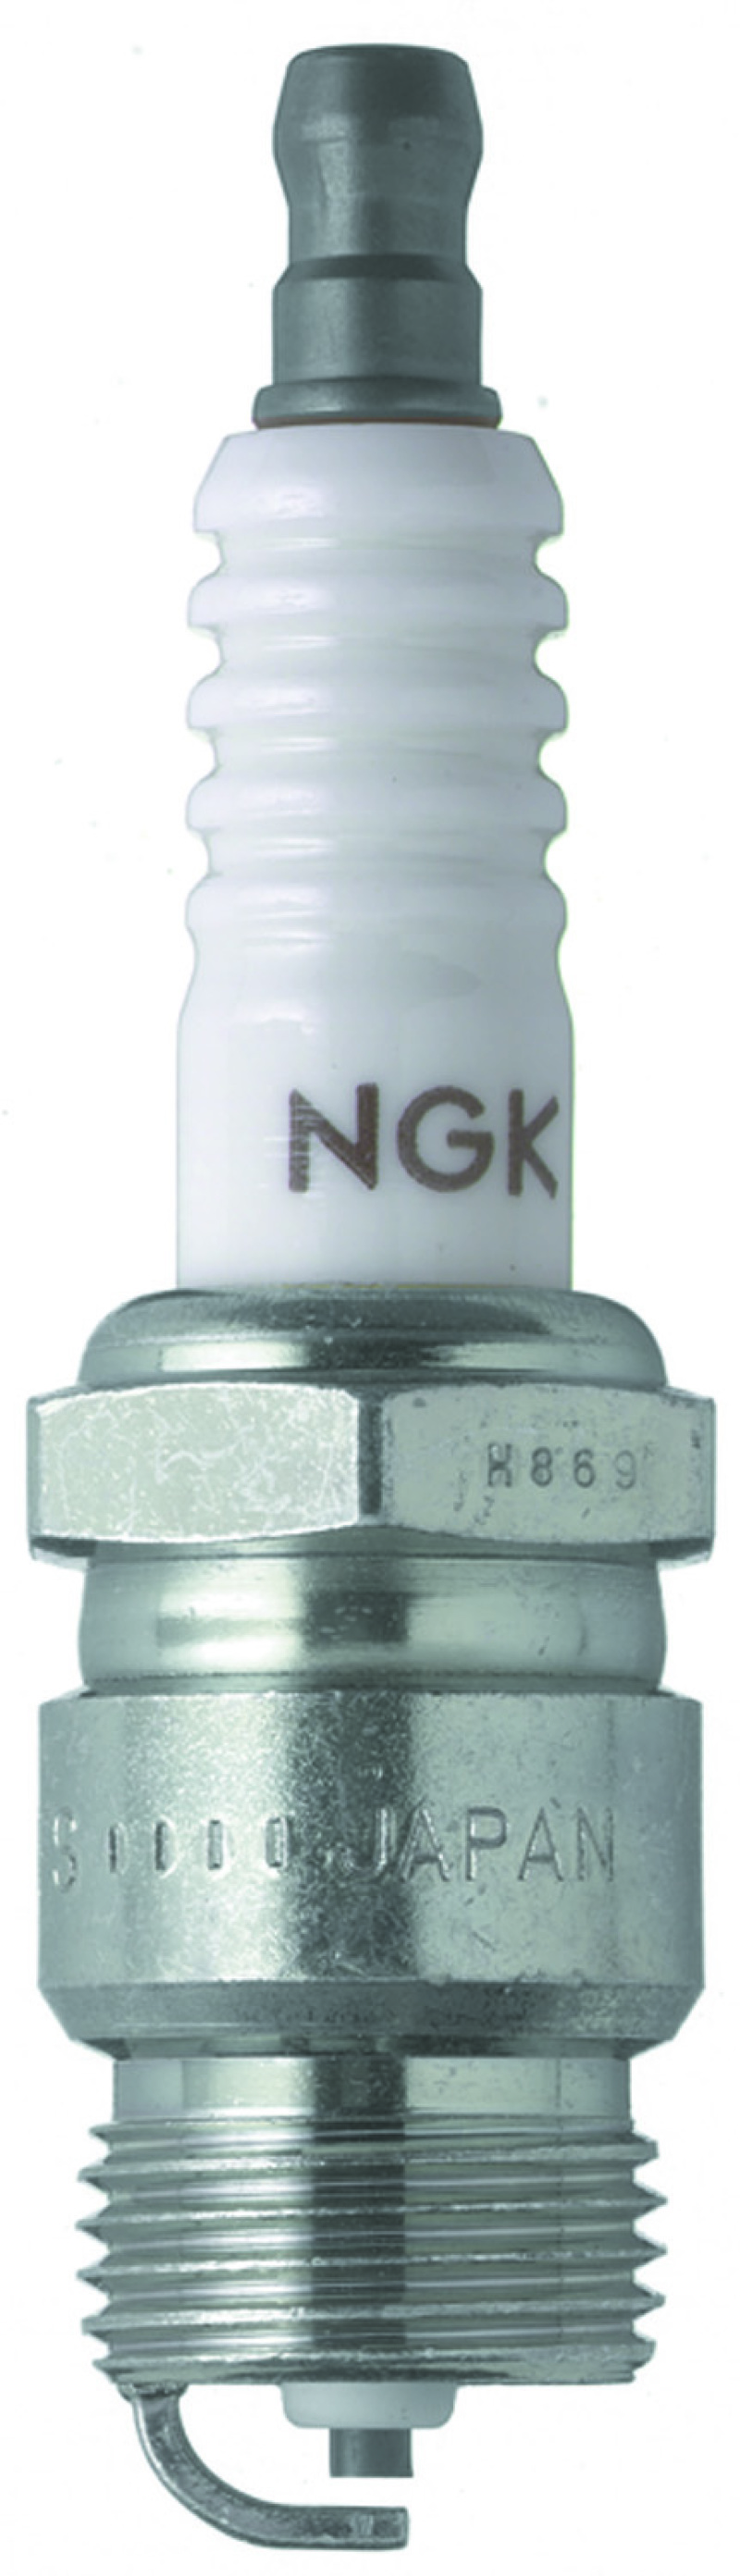 NGK Standard Spark Plug Box of 10 (AP8FS) - 2227